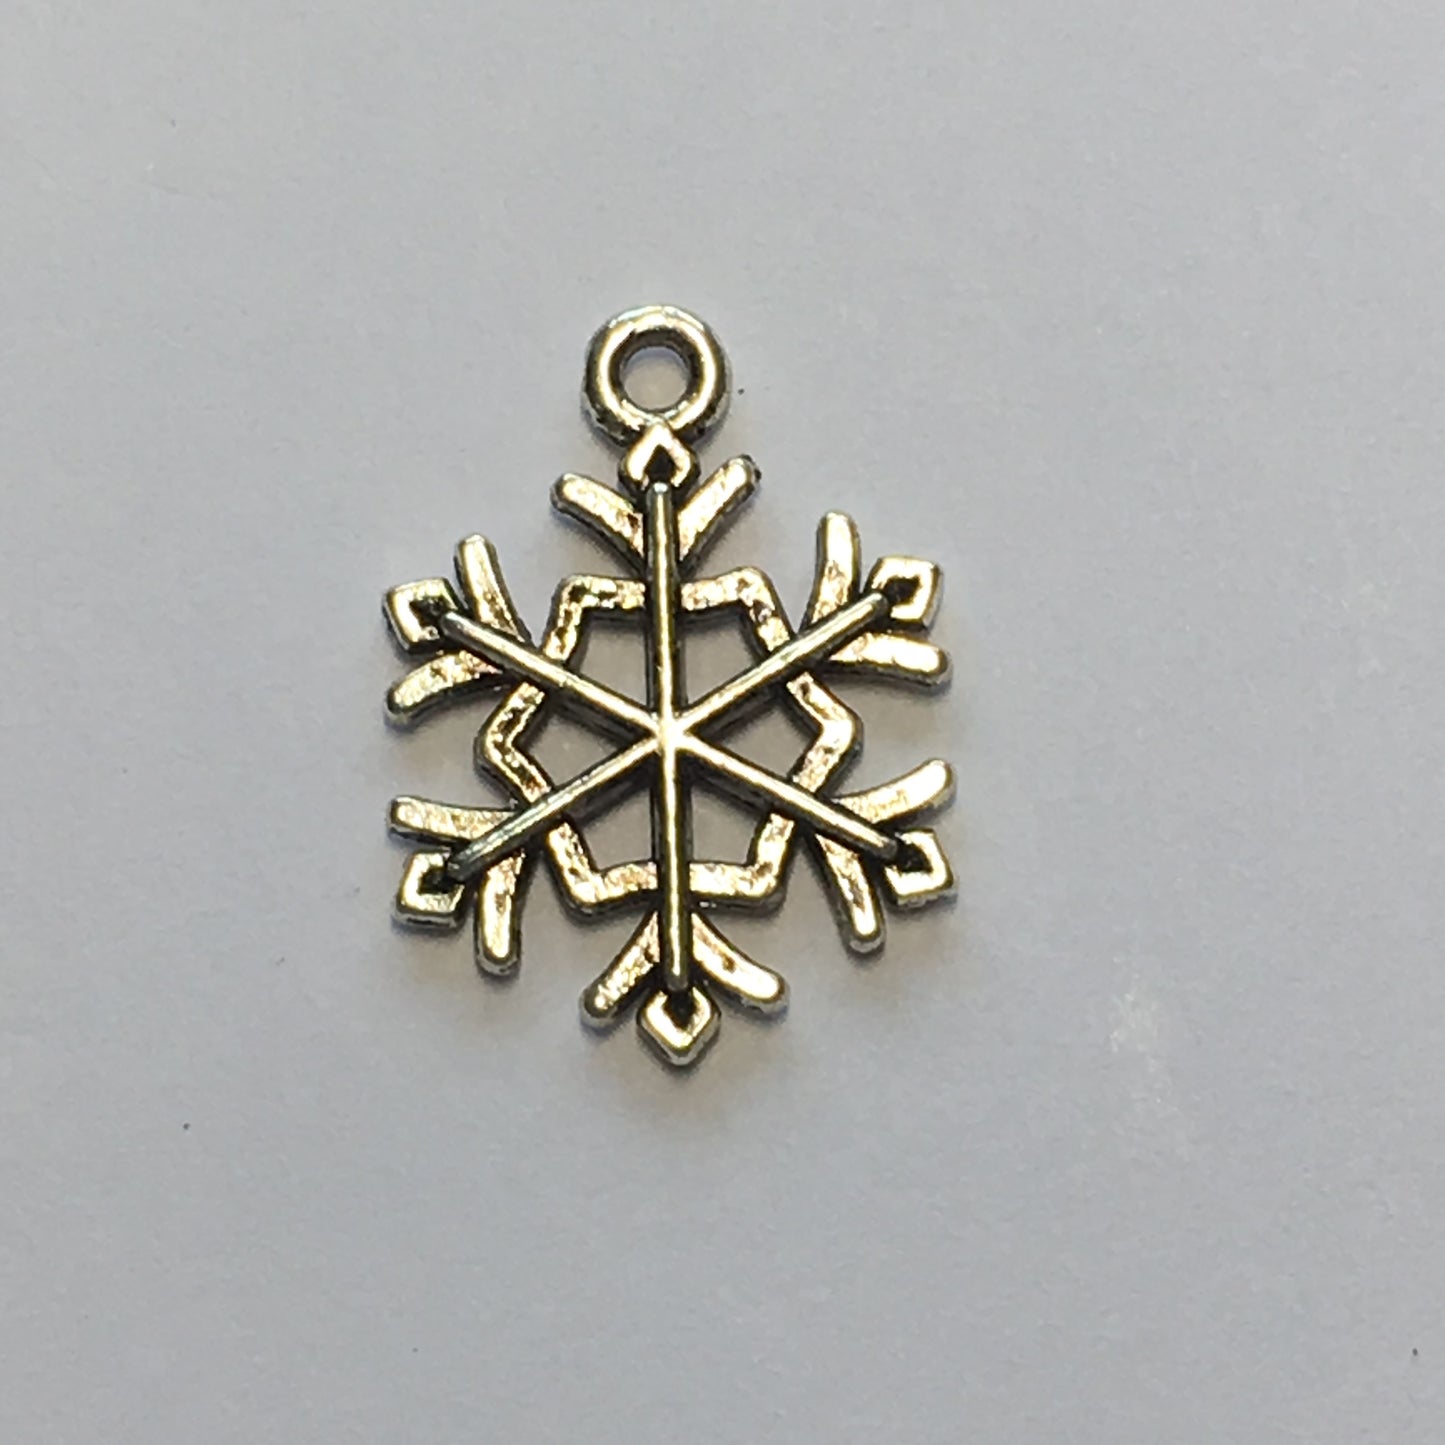 Antique Silver Snowflake Charm, 21 x 15 mm